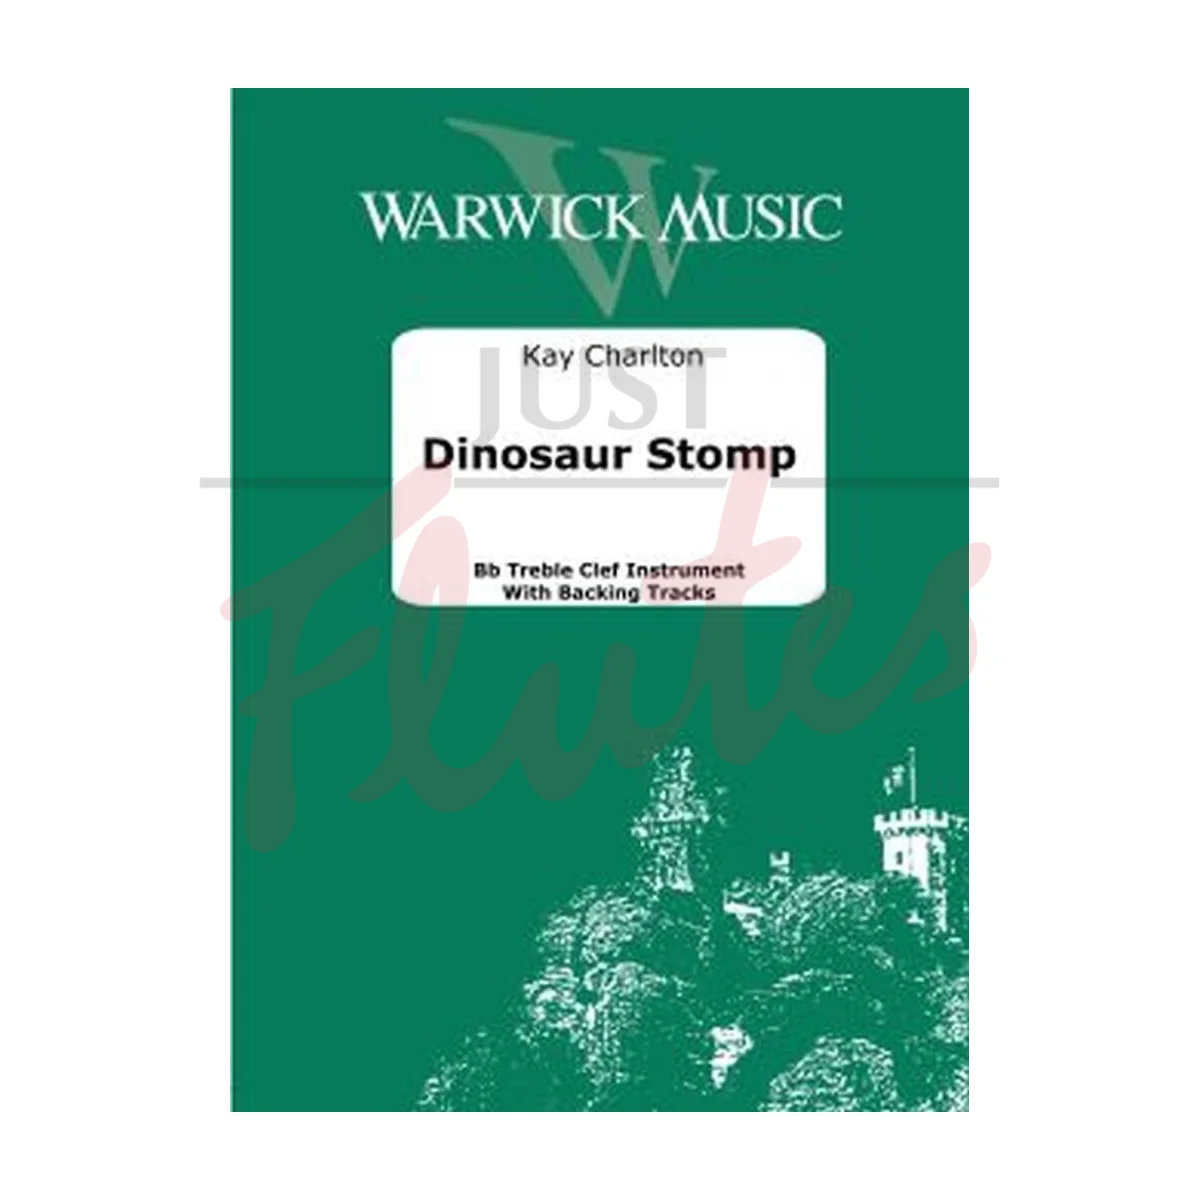 Dinosaur Stomp for Bb Treble Clef Instruments